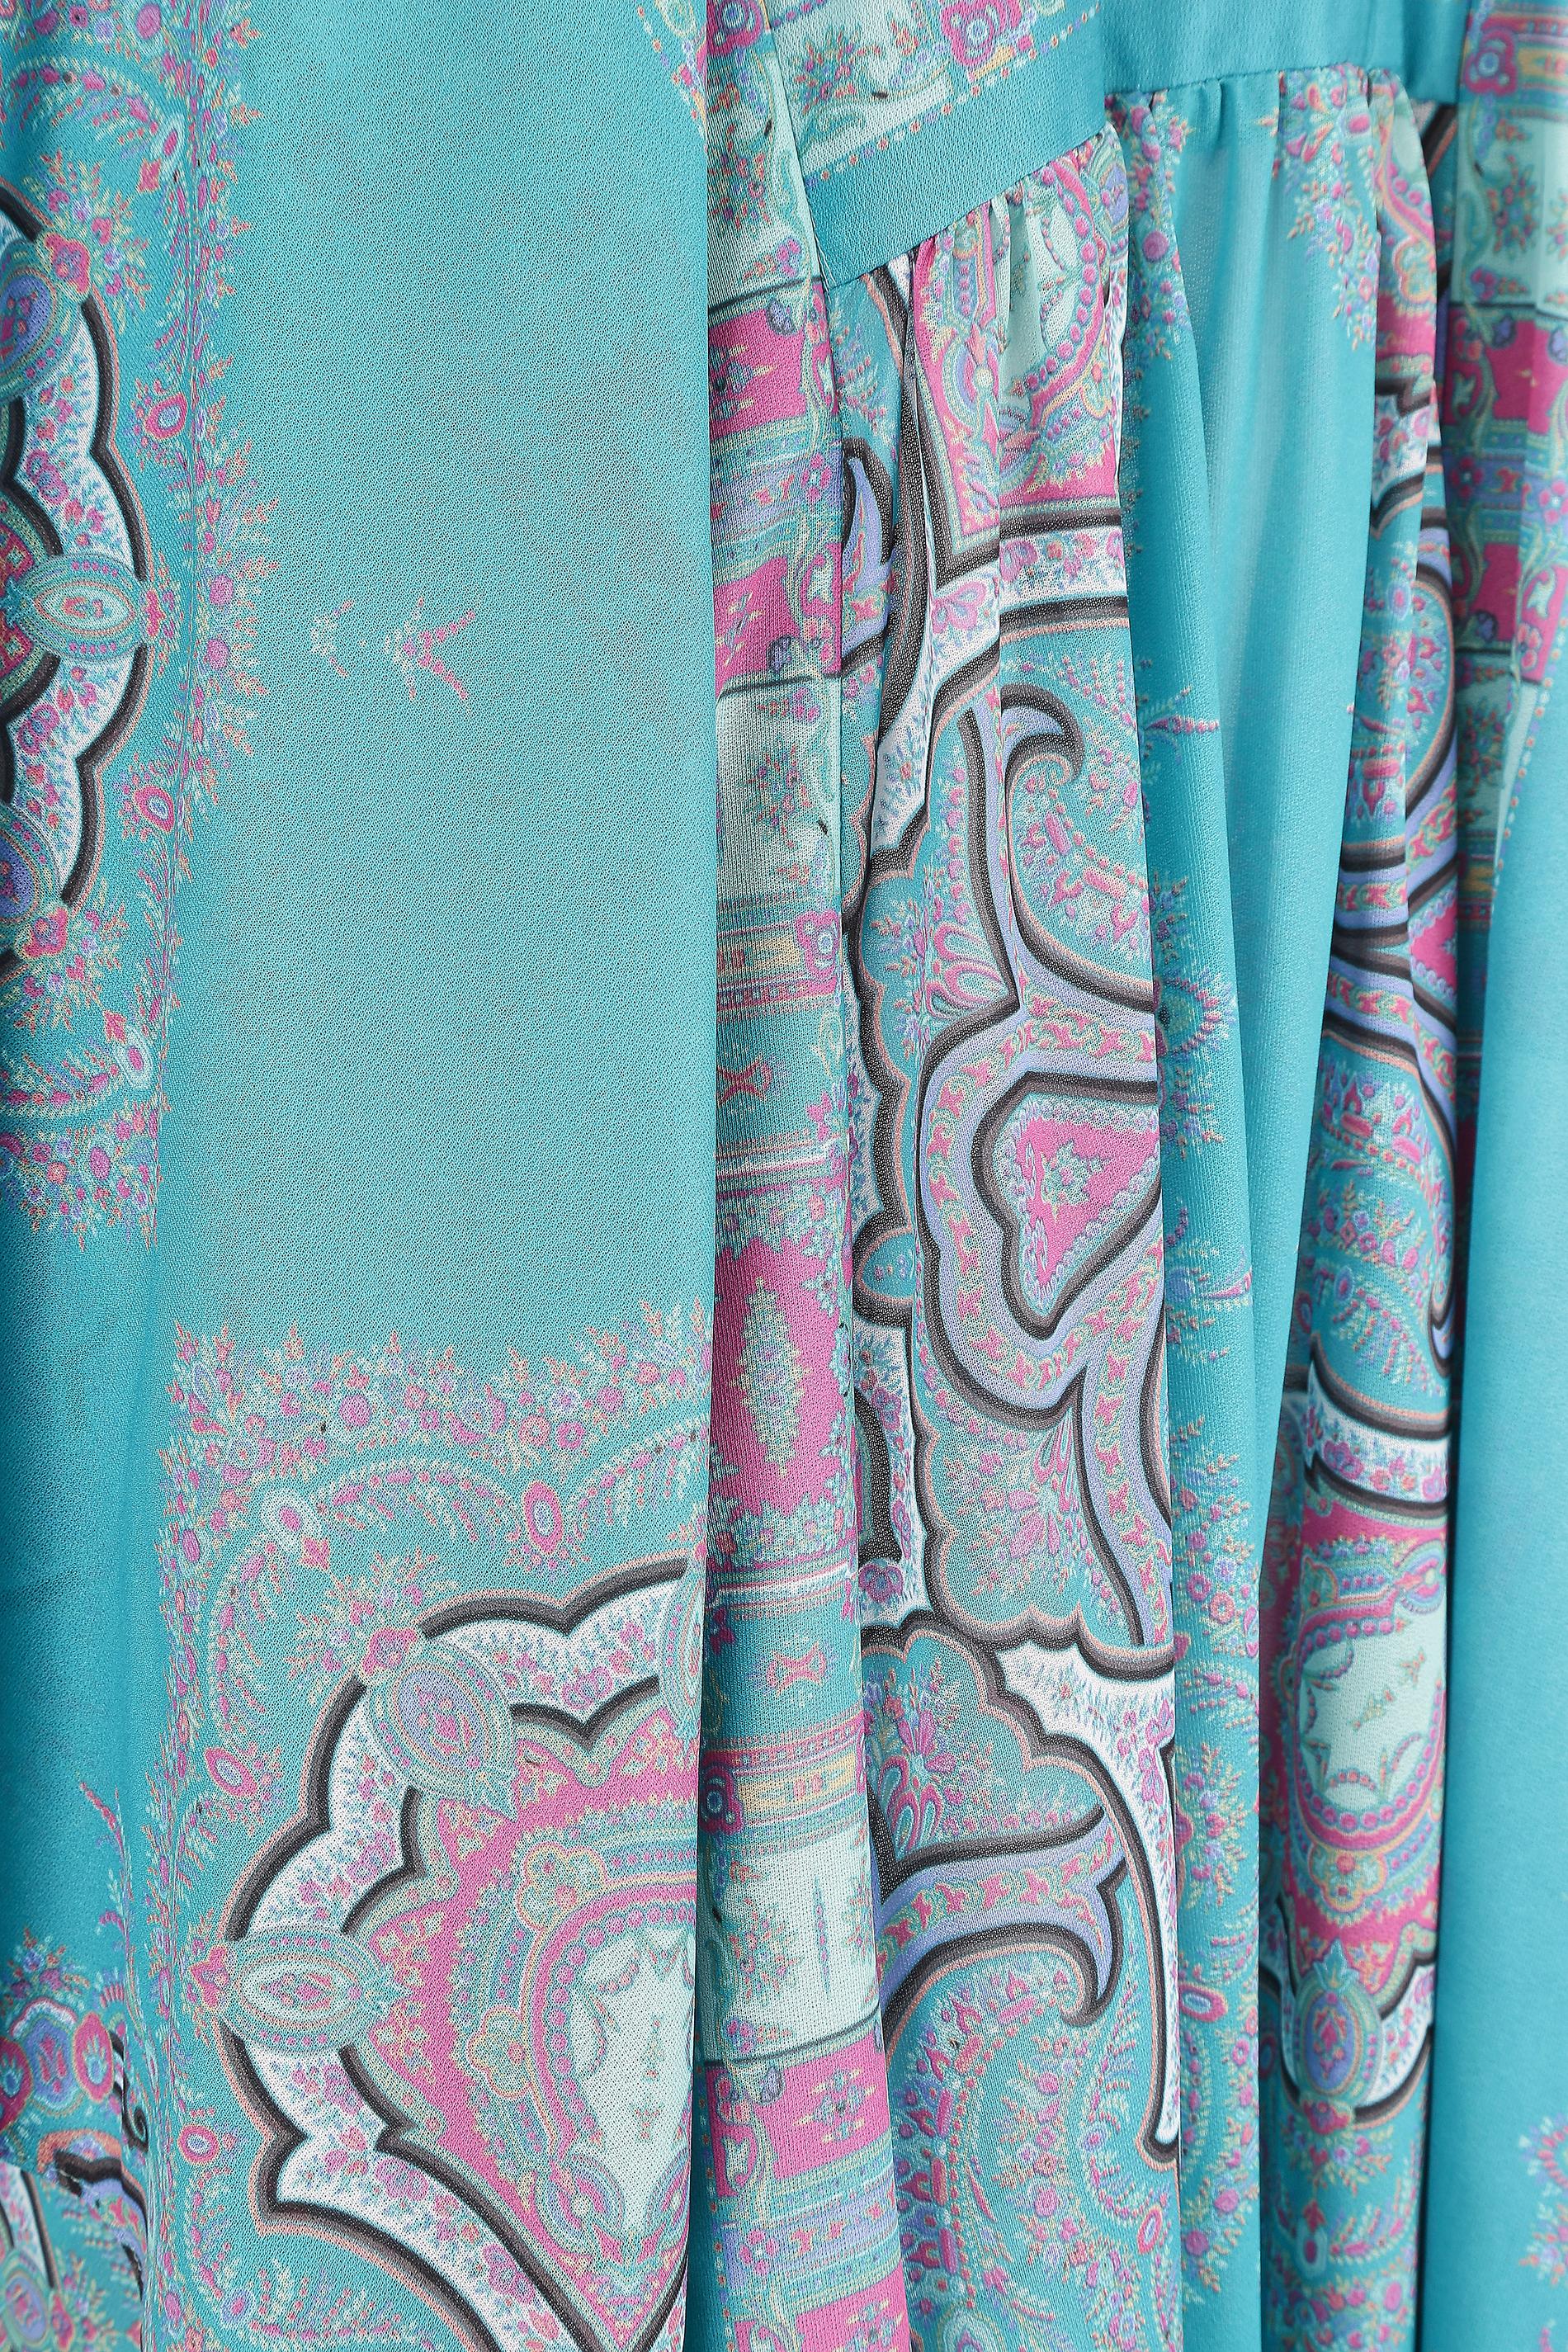 Women's 1970s John Neville Turquoise Paisley Print Maxi Dress For Sale